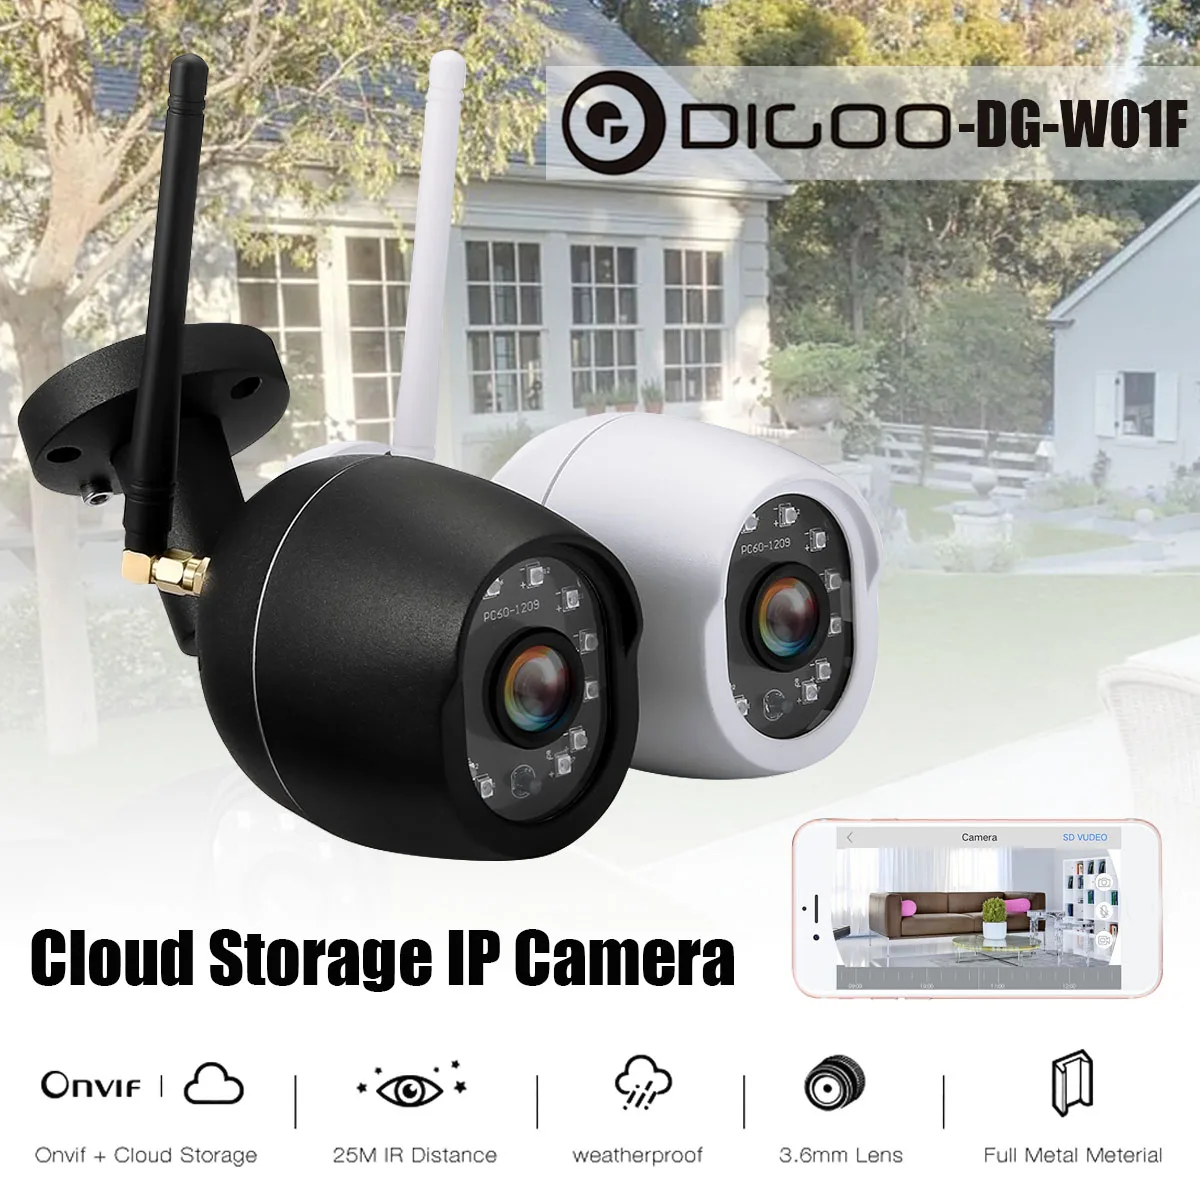 DIGOO DG-W01f система видеонаблюдения 720P наружная ip-камера видеонаблюдения Система видеонаблюдения комплект видеонаблюдения Водонепроницаемая wifi ip-камера безопасности